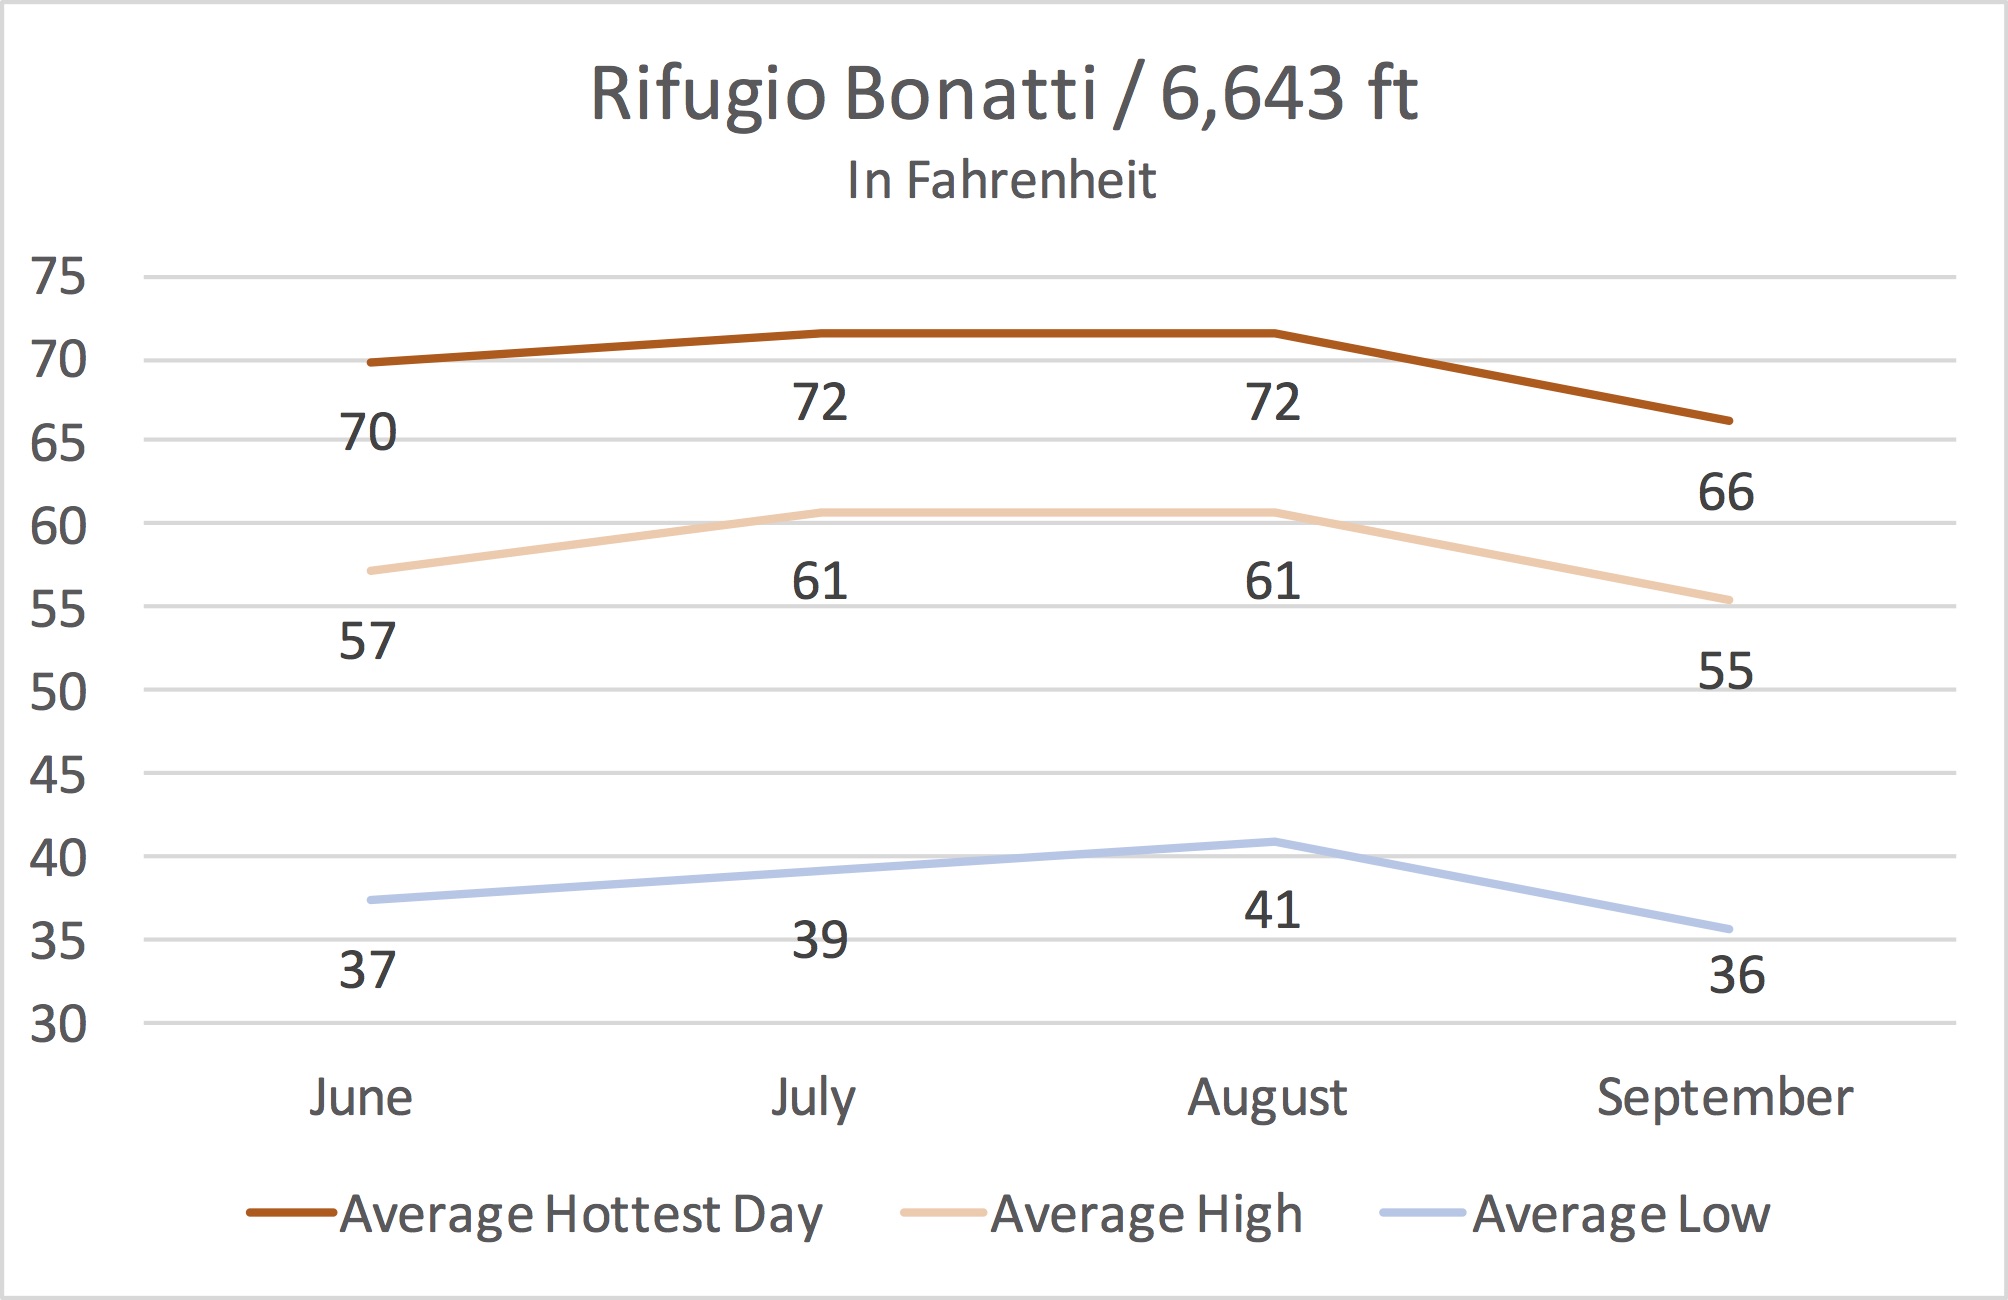 Rifugio Bonatti Average Temperature from June to September